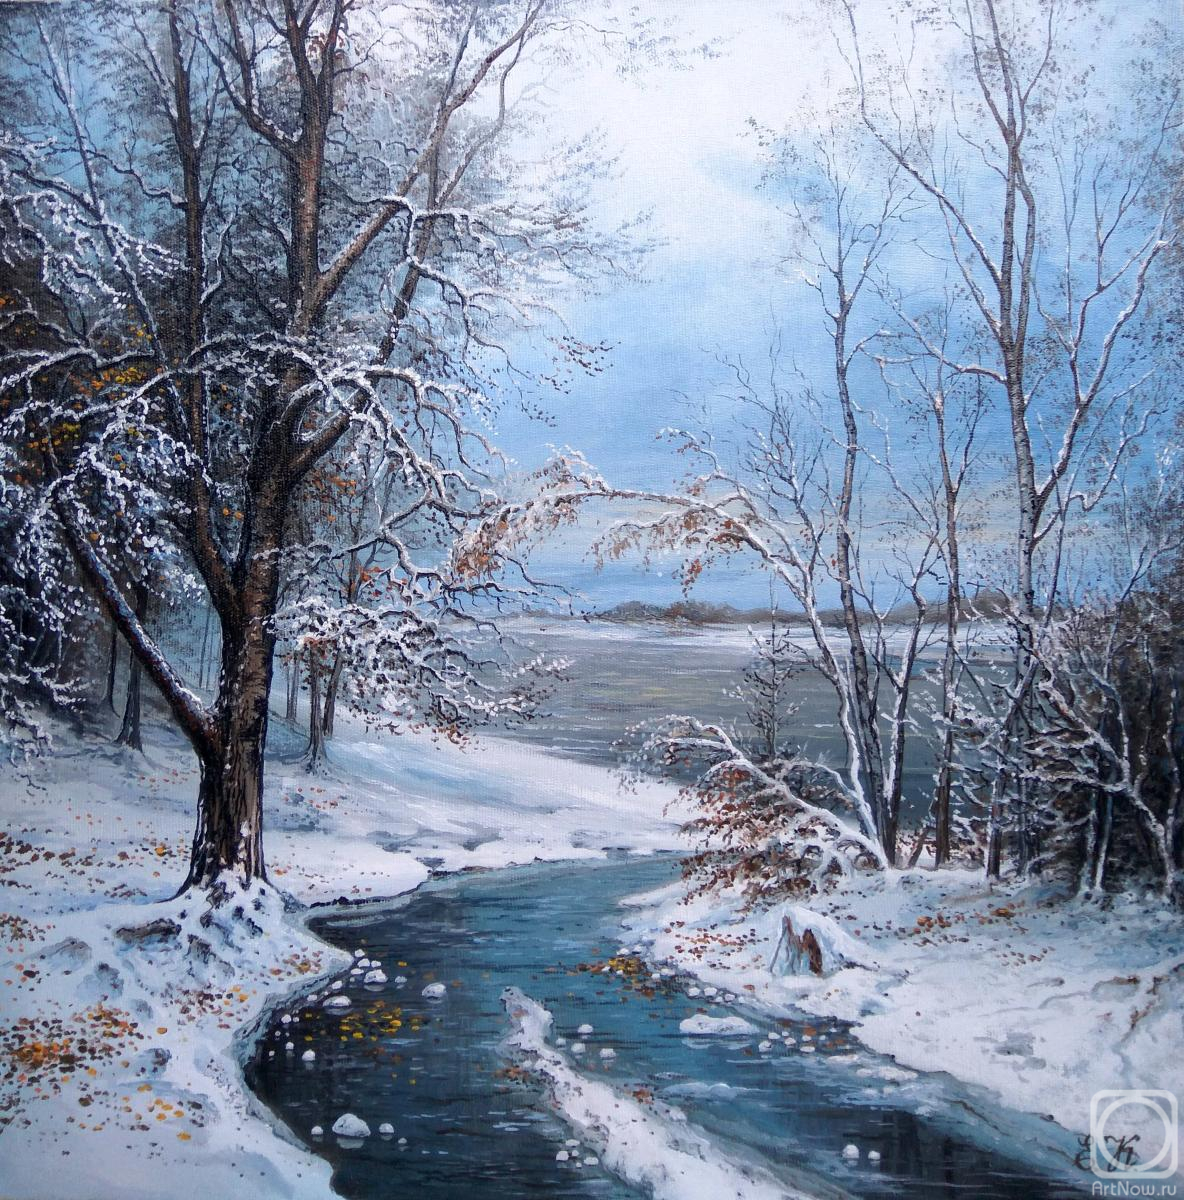 Korableva Elena. Winter